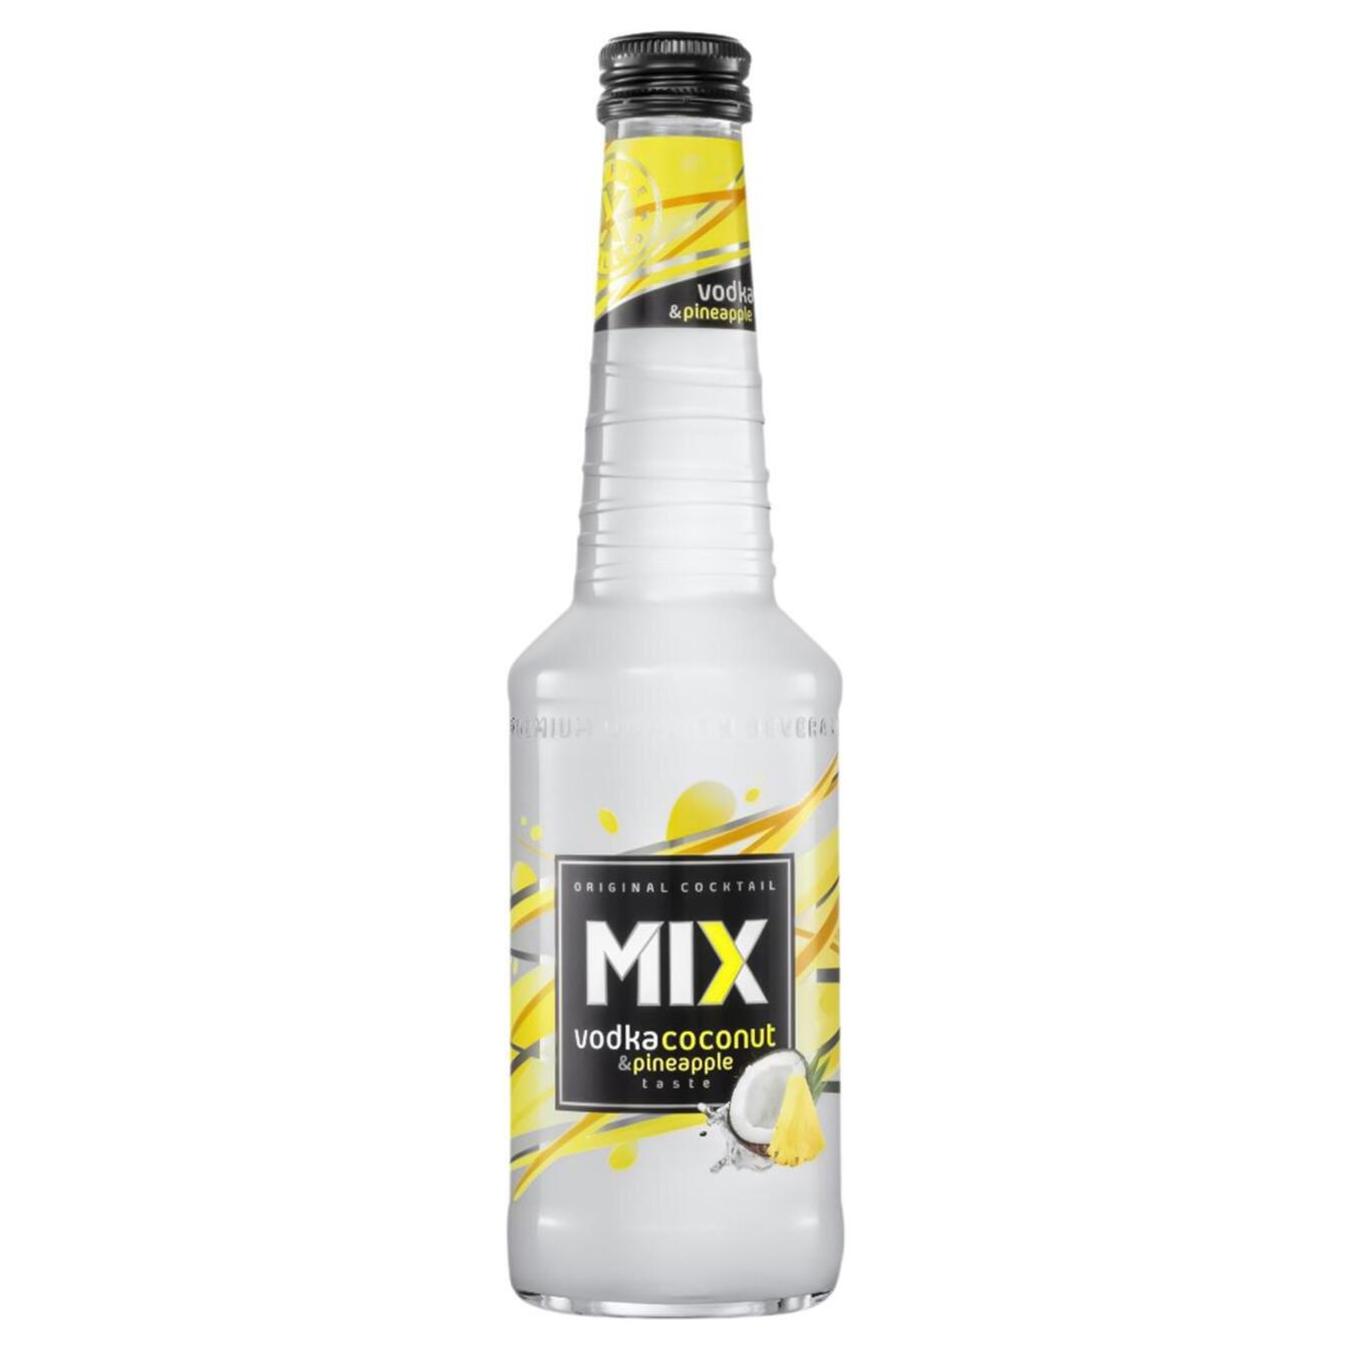 Low-alcohol drink MIX vodka pineapple coconut 4% 0.33l glass